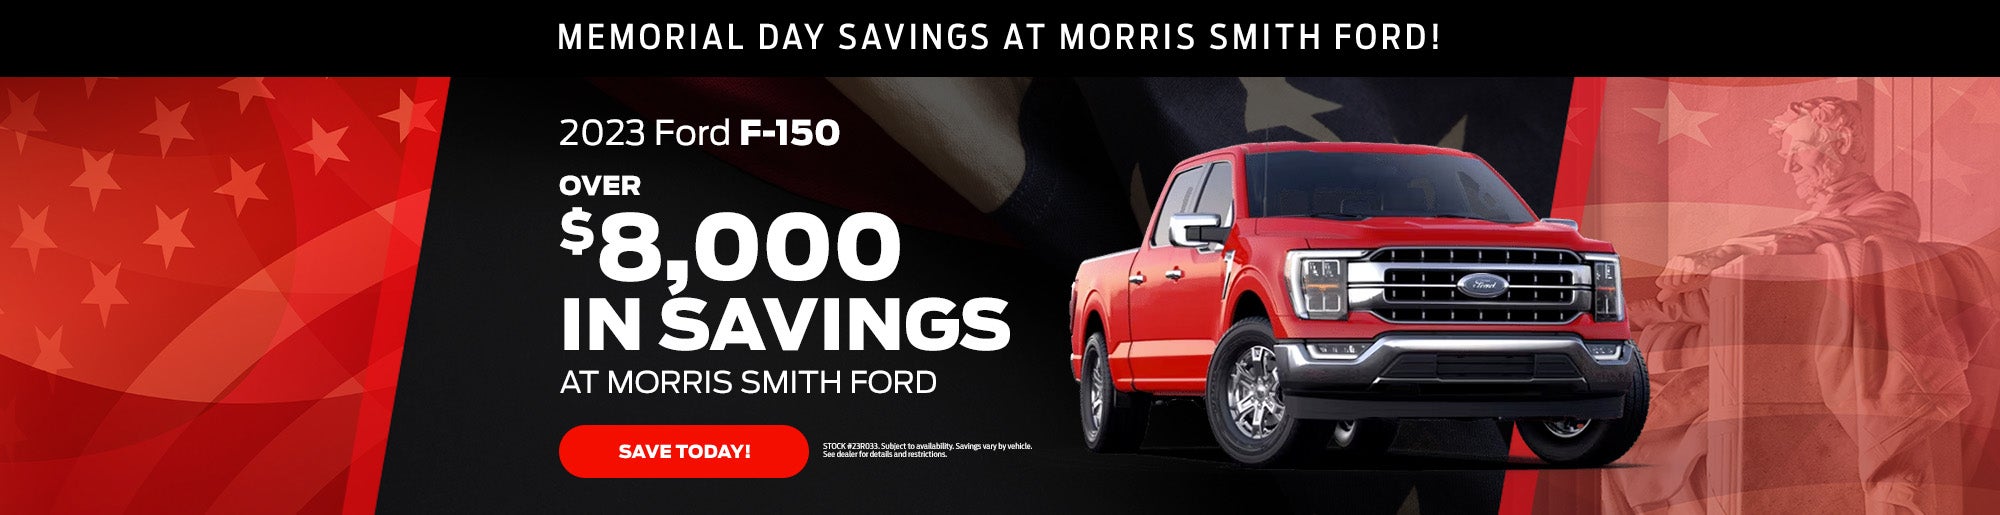 Ford F150 Memorial Day Savings